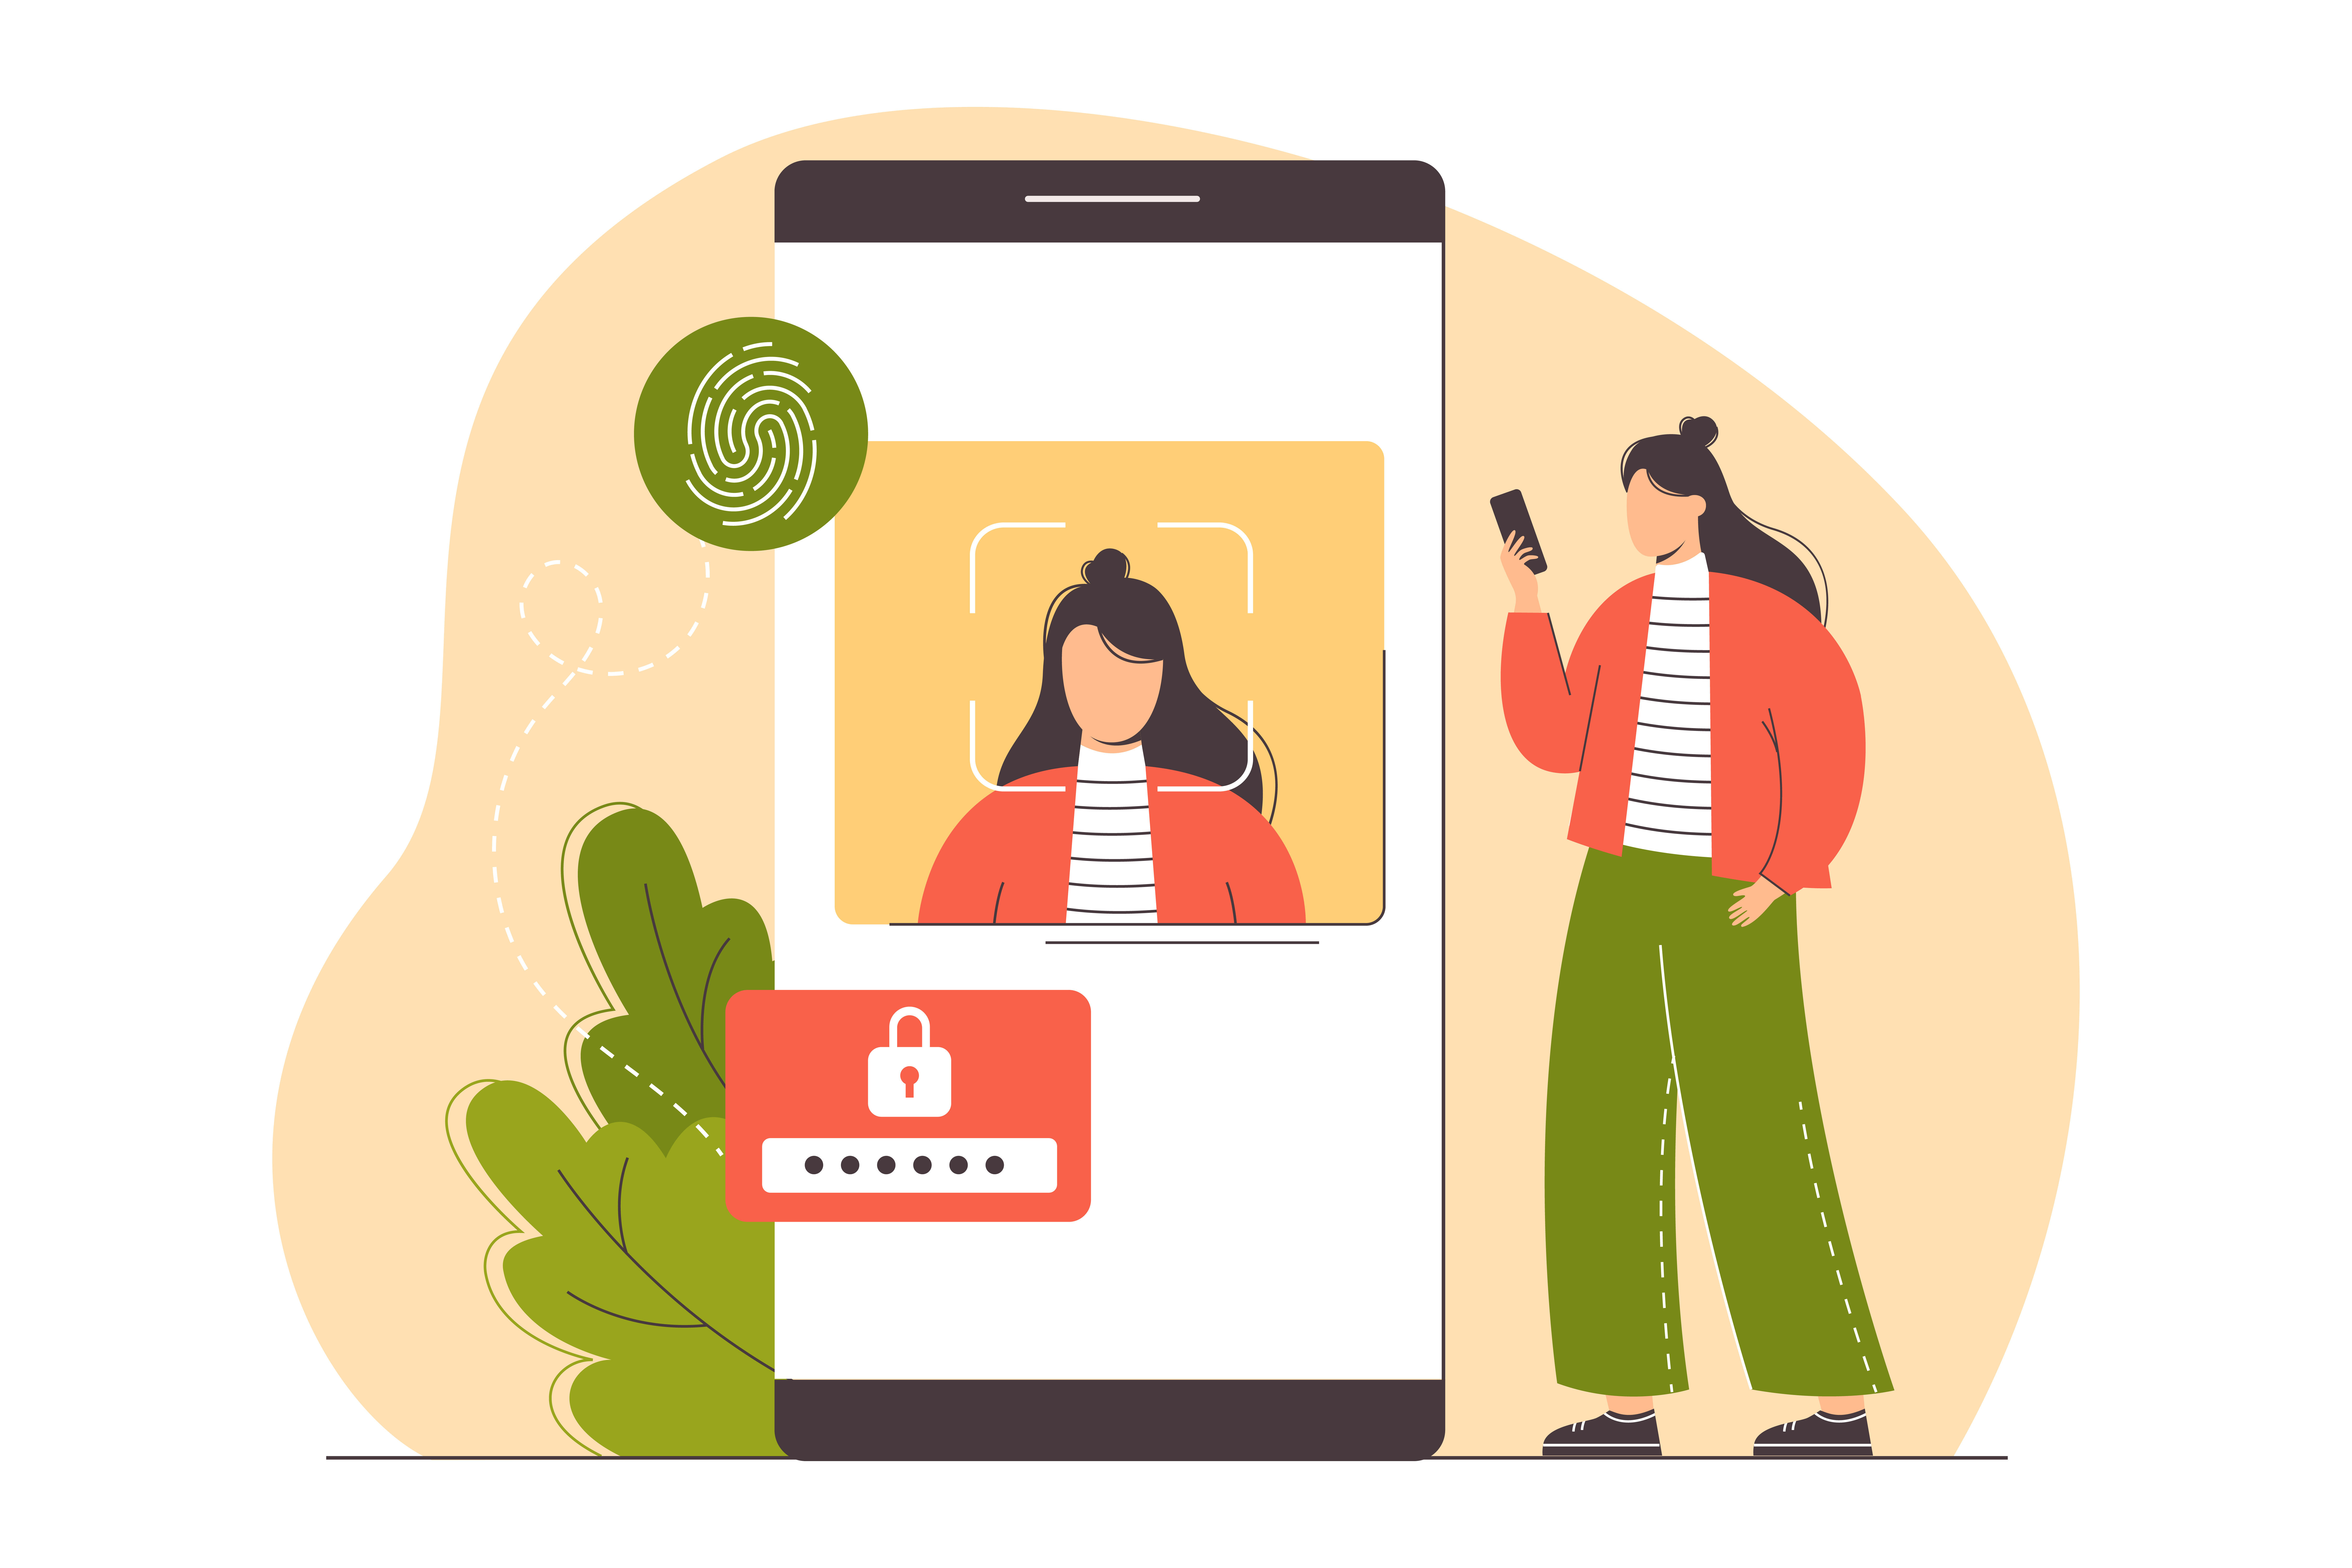 Eidv Key Trends And Benefits For Digital Identity Verification